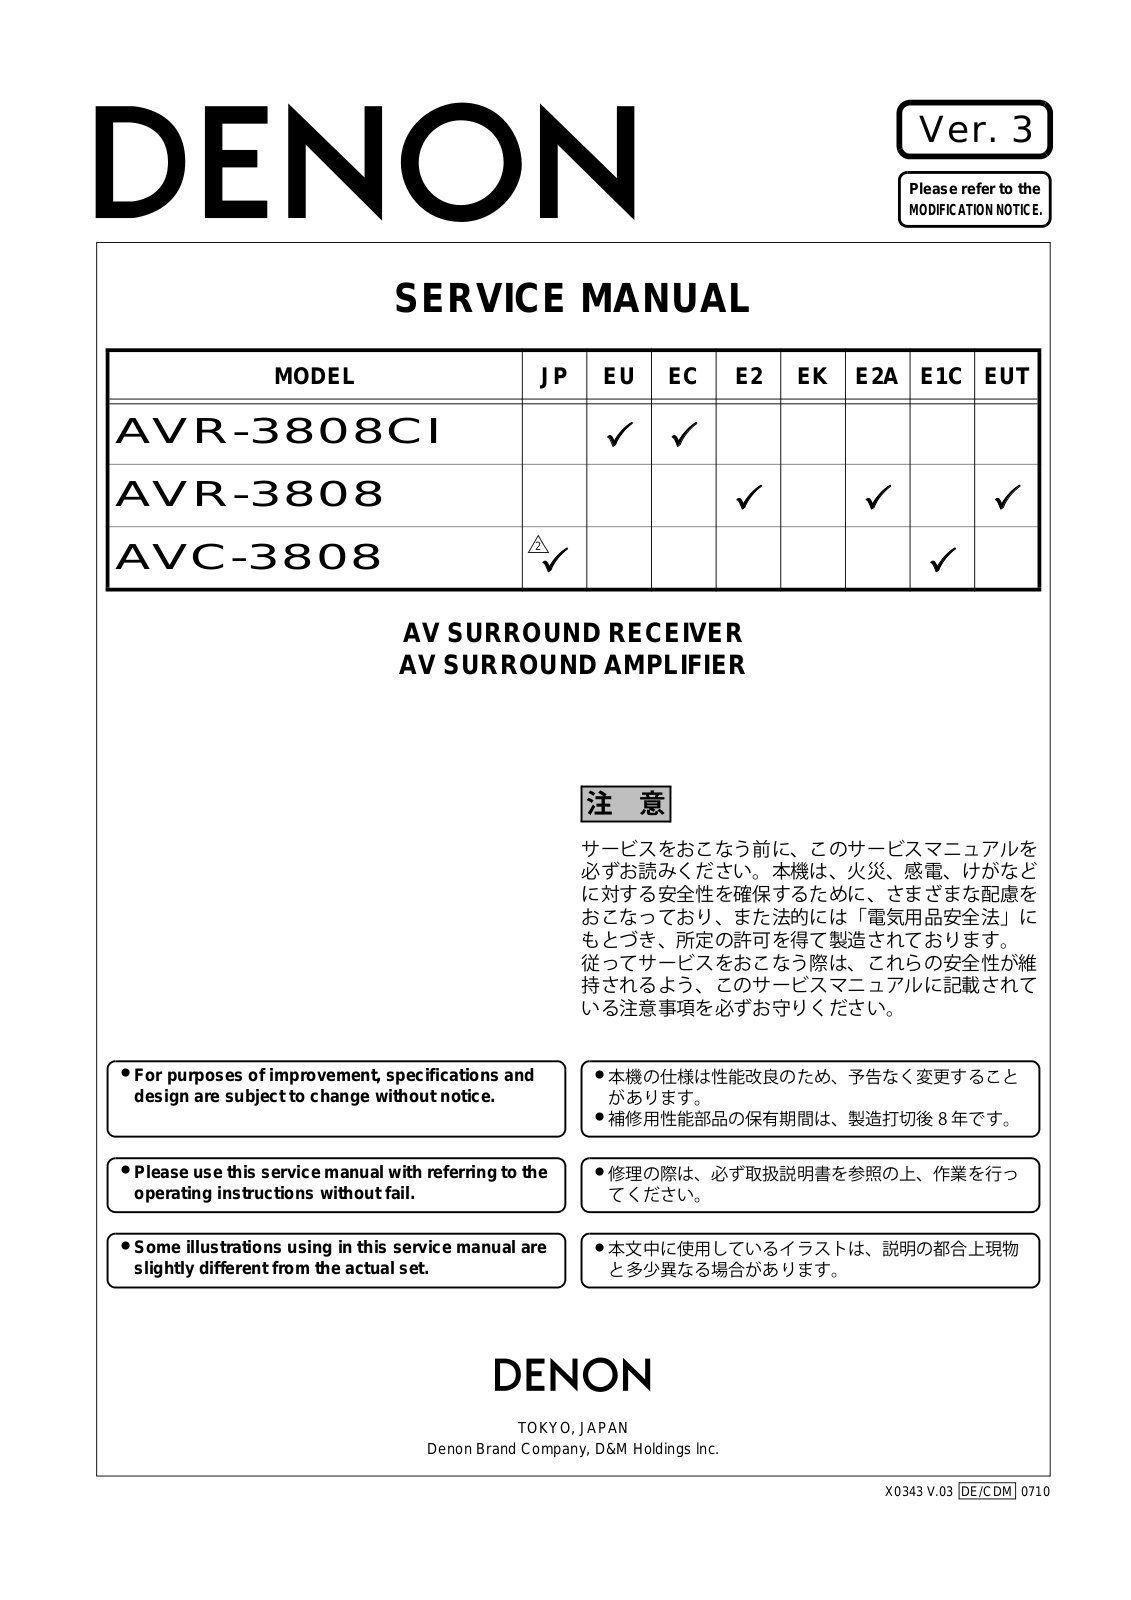 Denon AVR-3808 Service manual